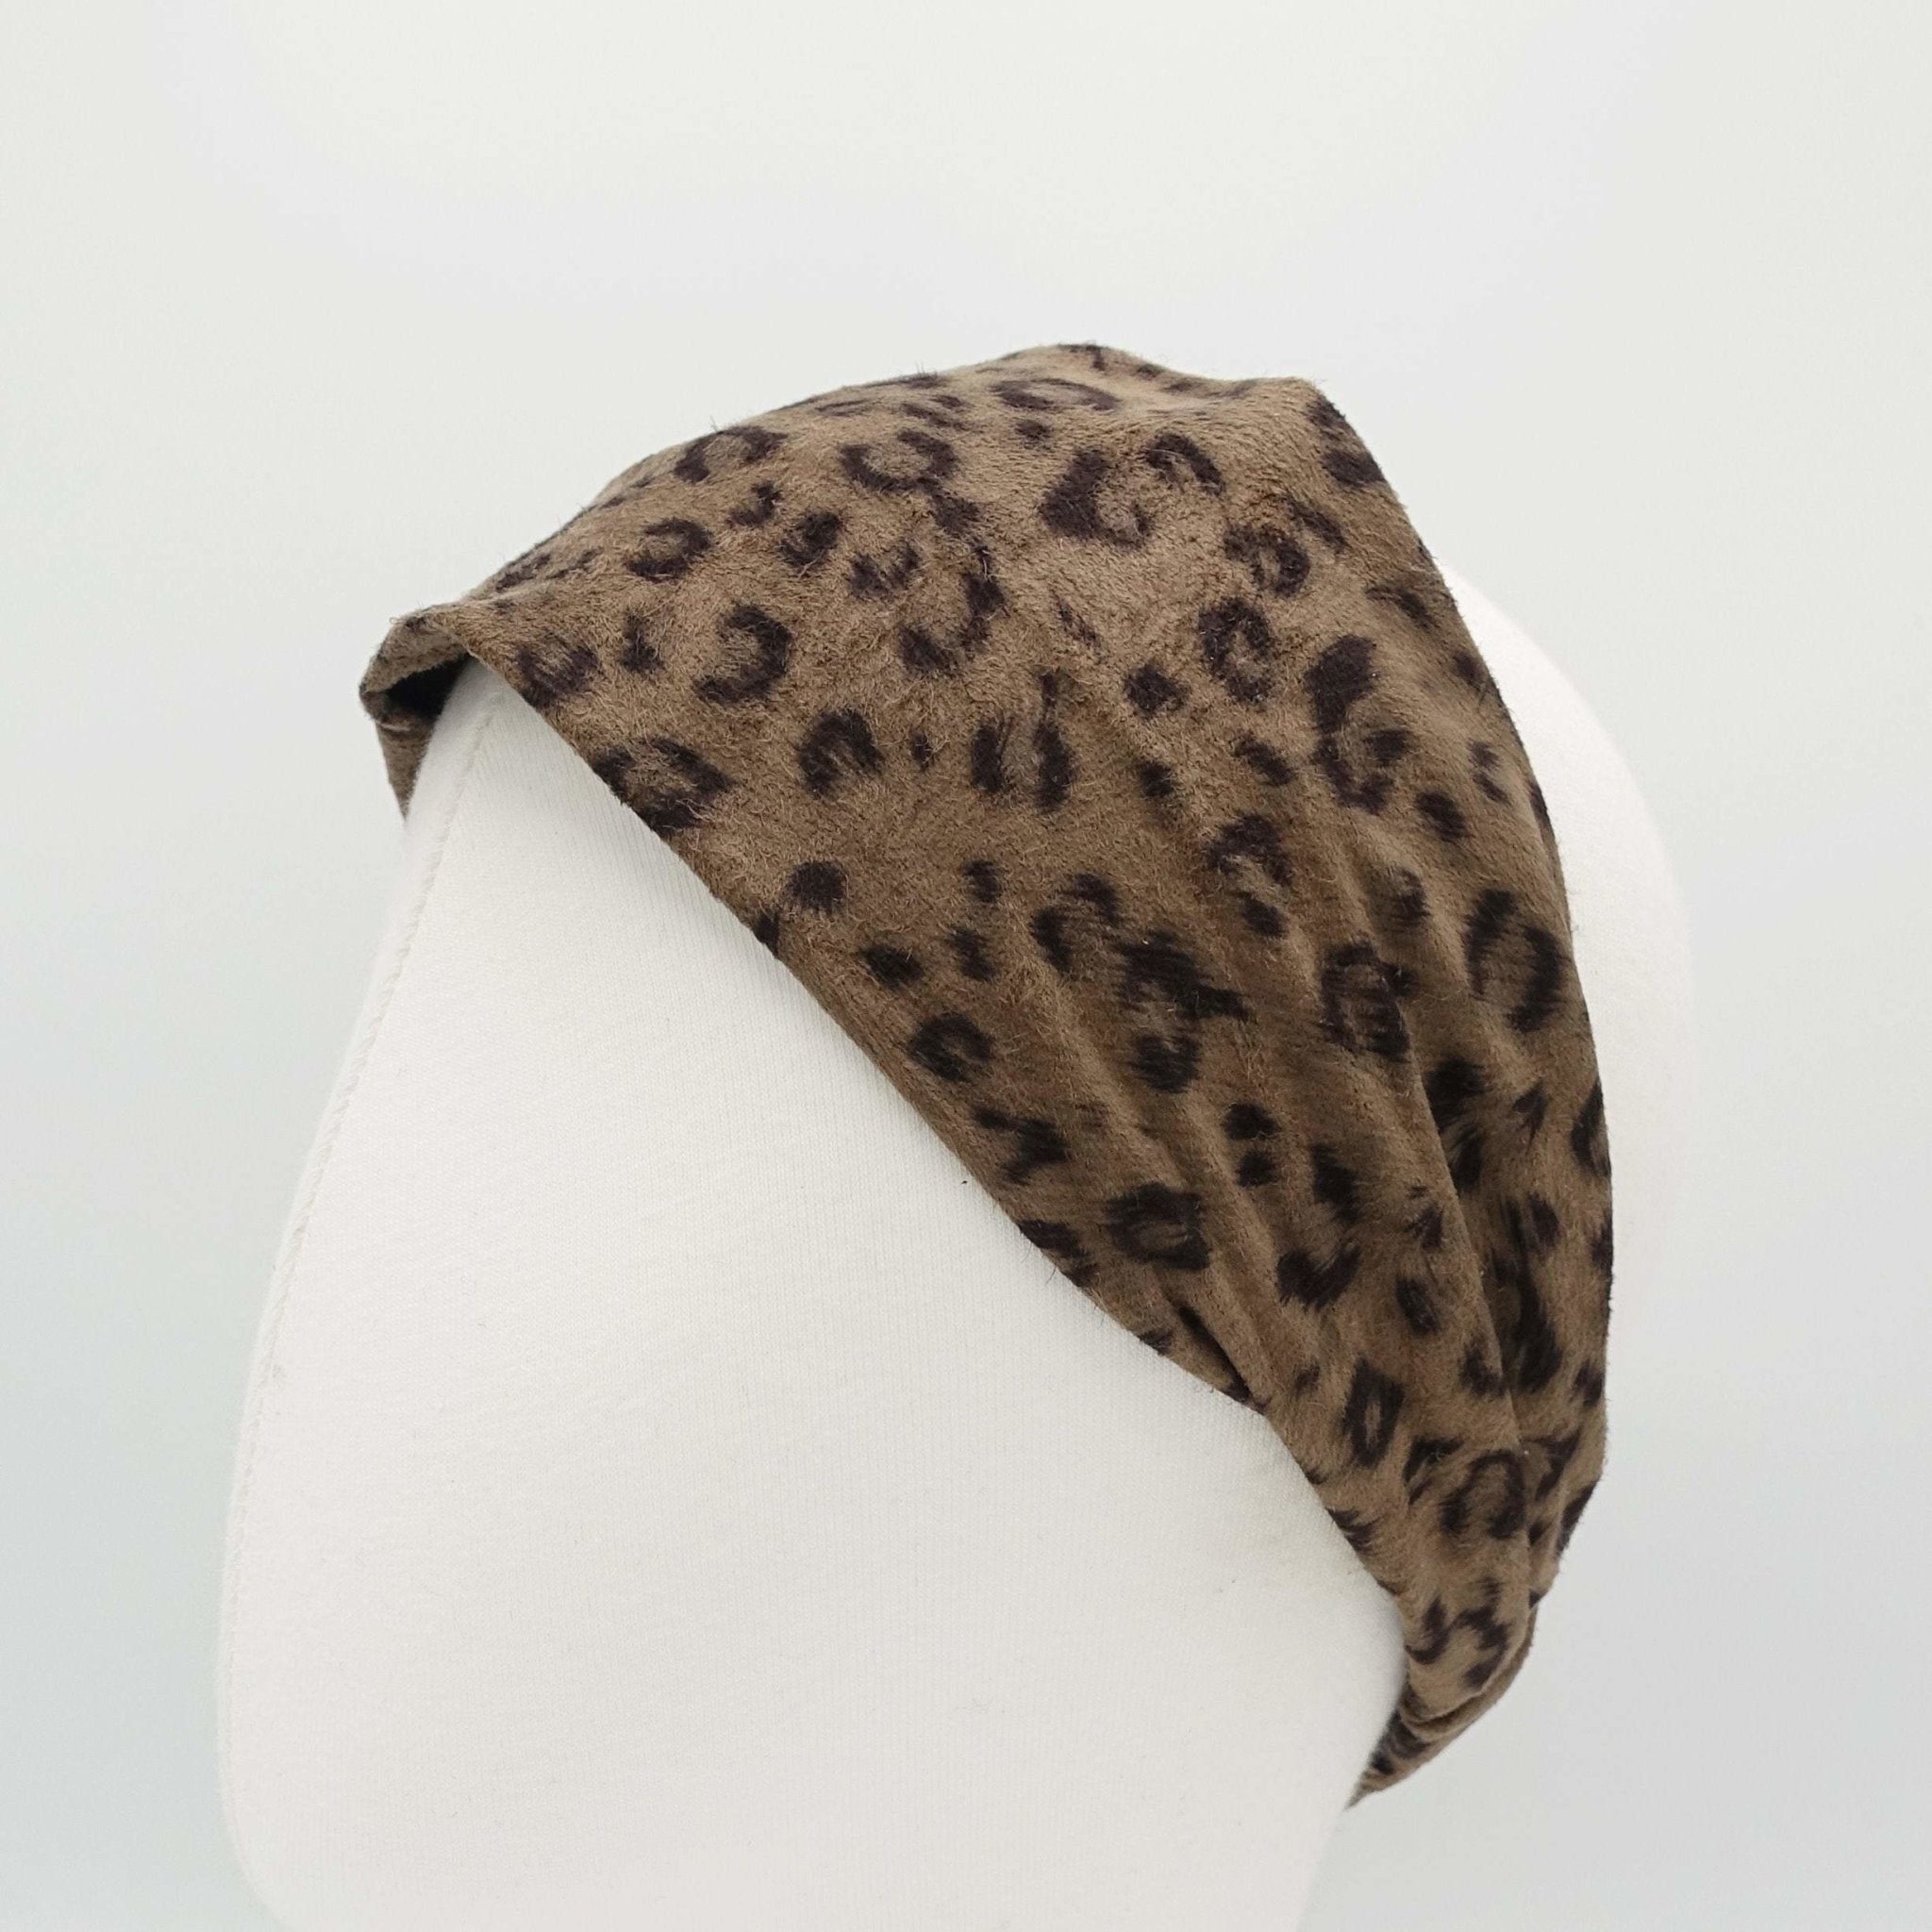 VeryShine suede fabric headband leopard print elastic turban women hair accessory